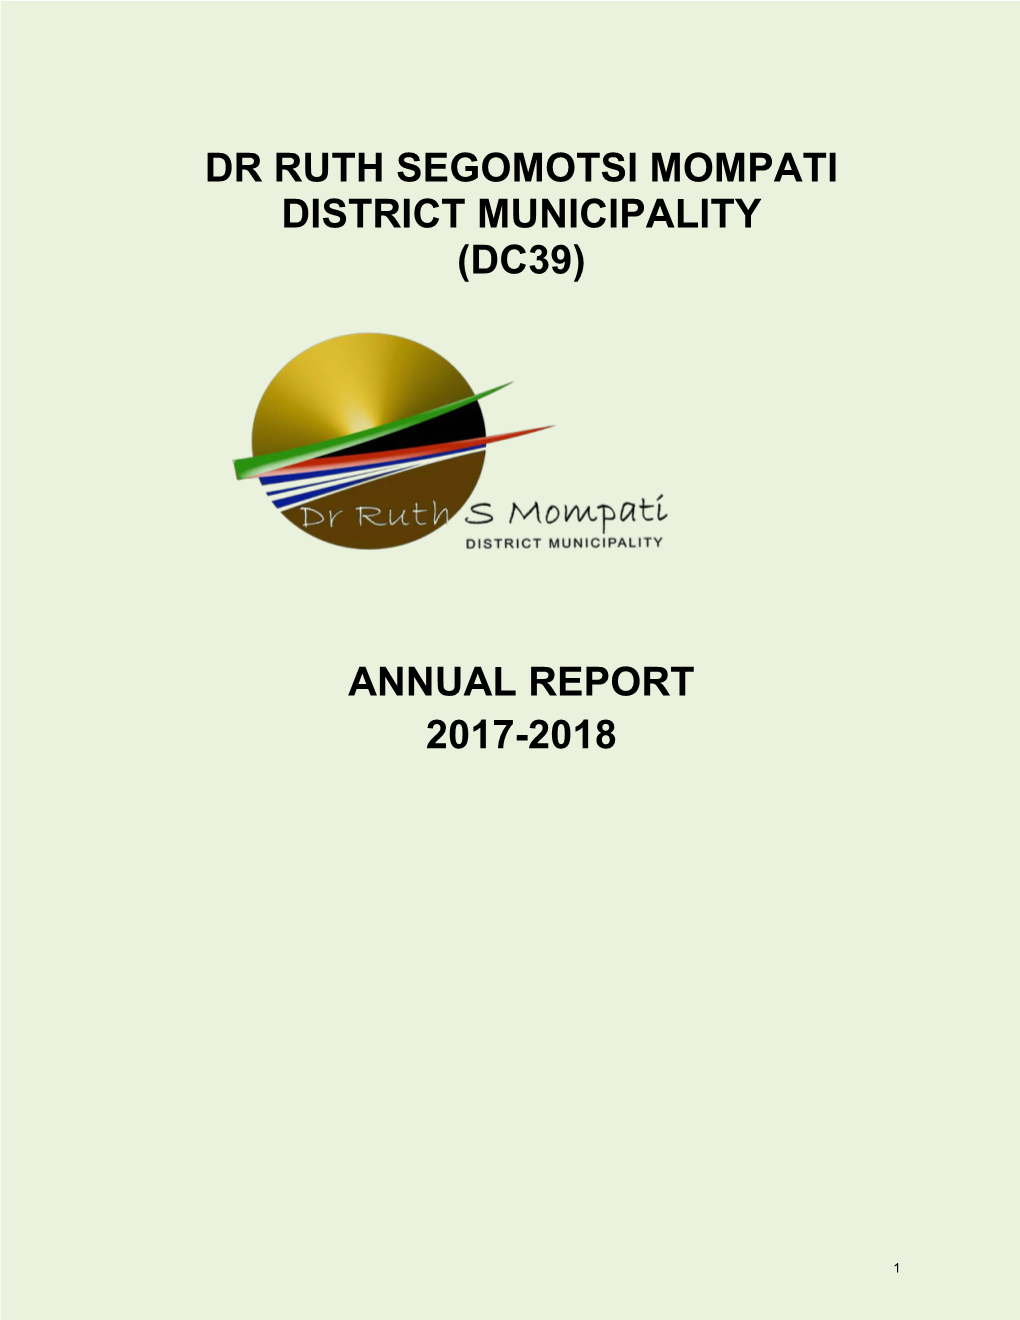 Dr Ruth Segomotsi Mompati District Municipality (Dc39) Annual Report